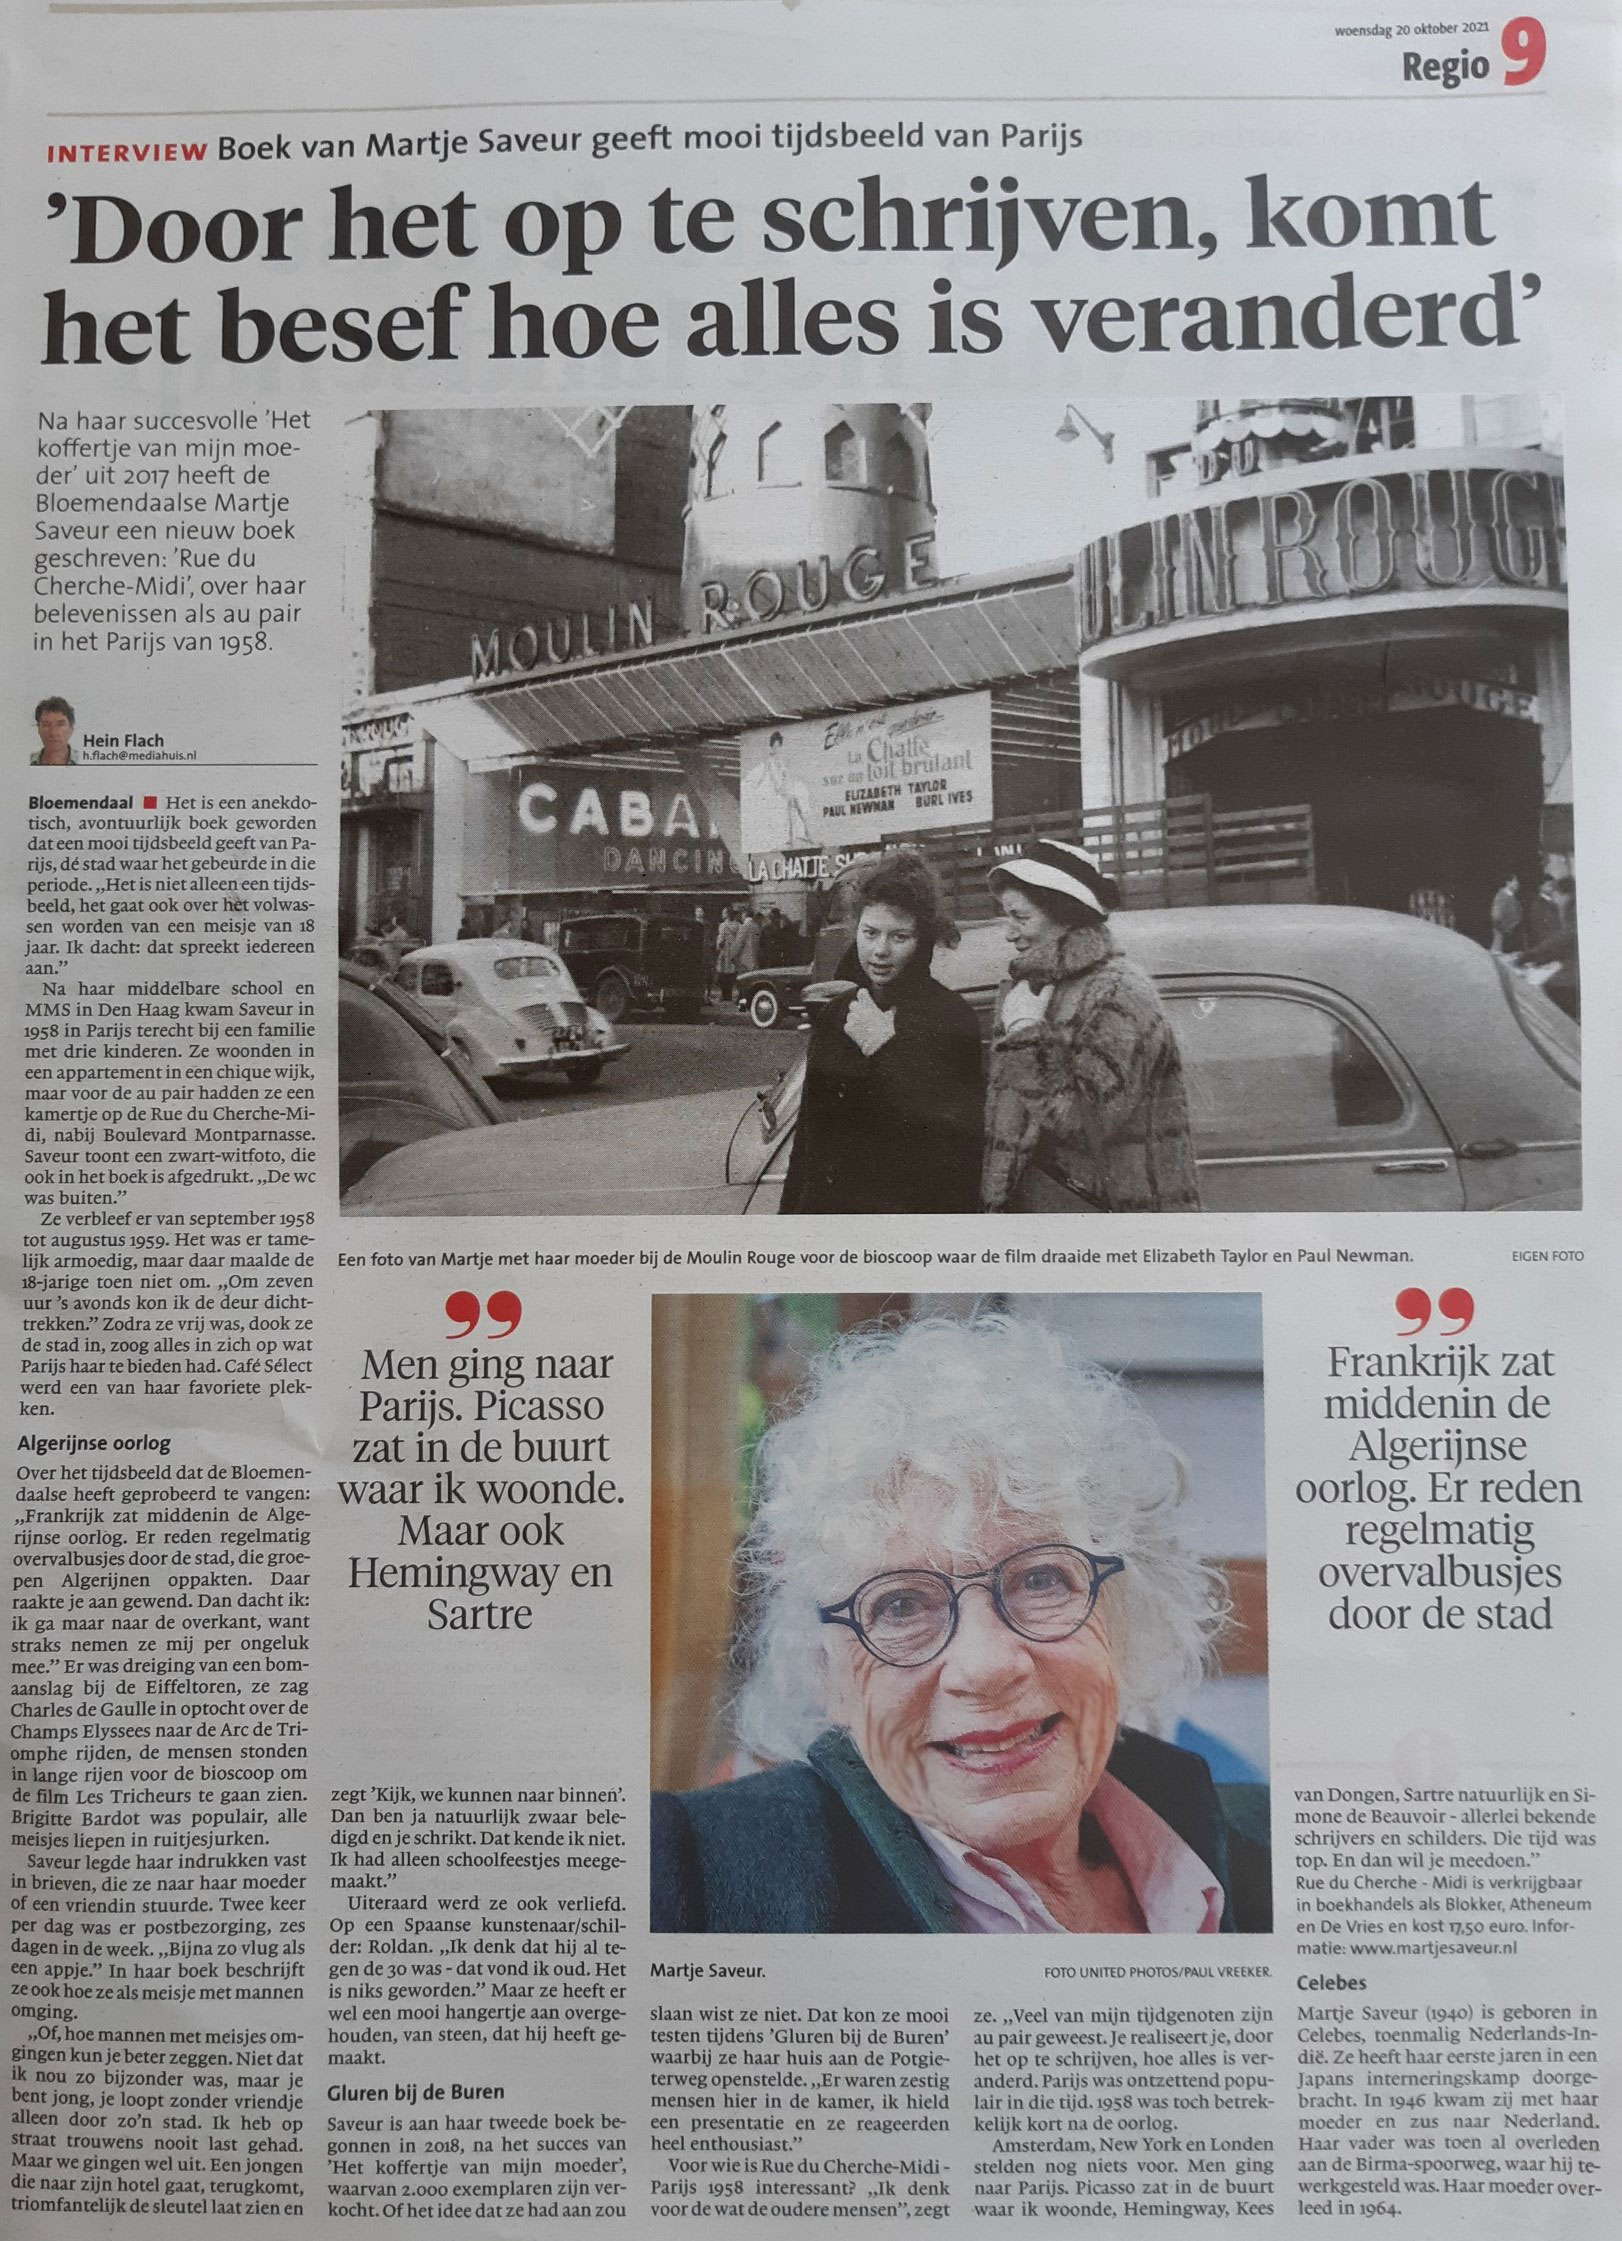 Haarlems Dagblad